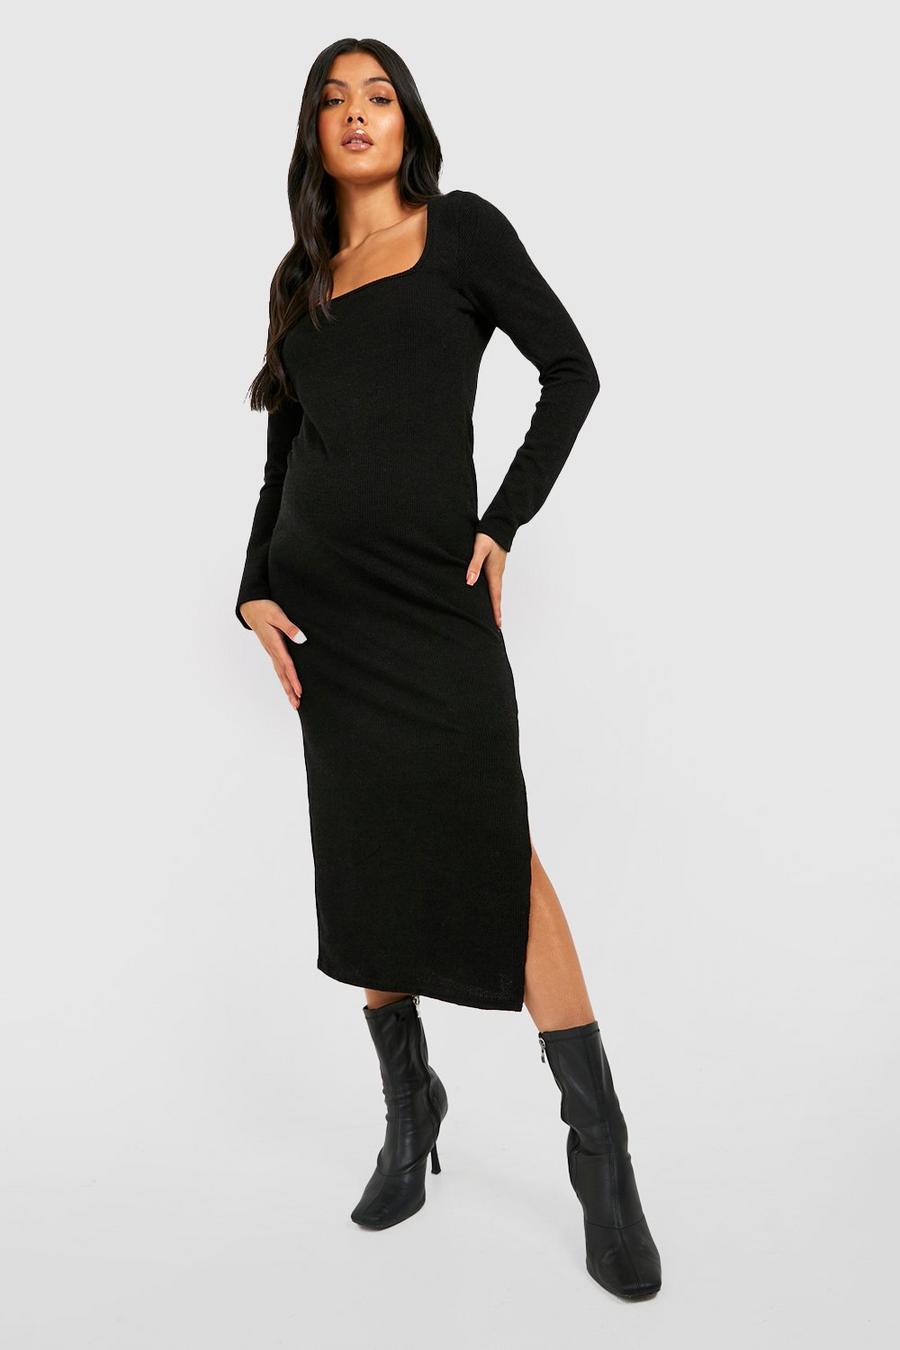 Black Maternity Square Neck Soft Knit Jumper Dress